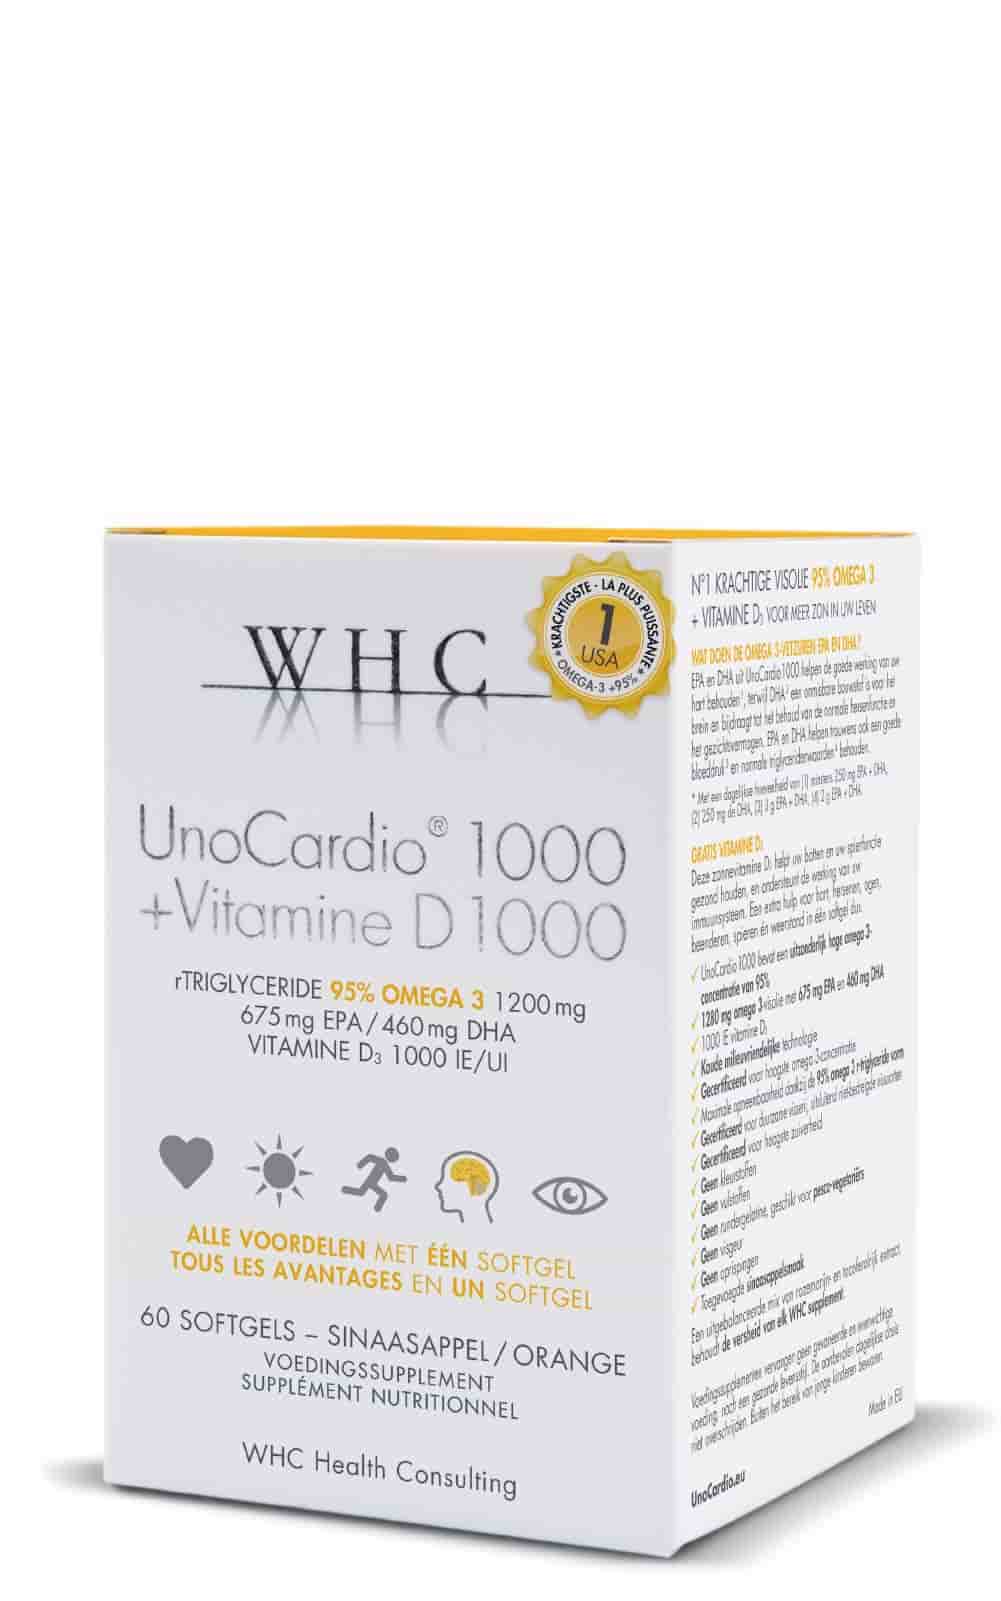 WHC UnoCardio 1000 bei LiveHelfi kaufen